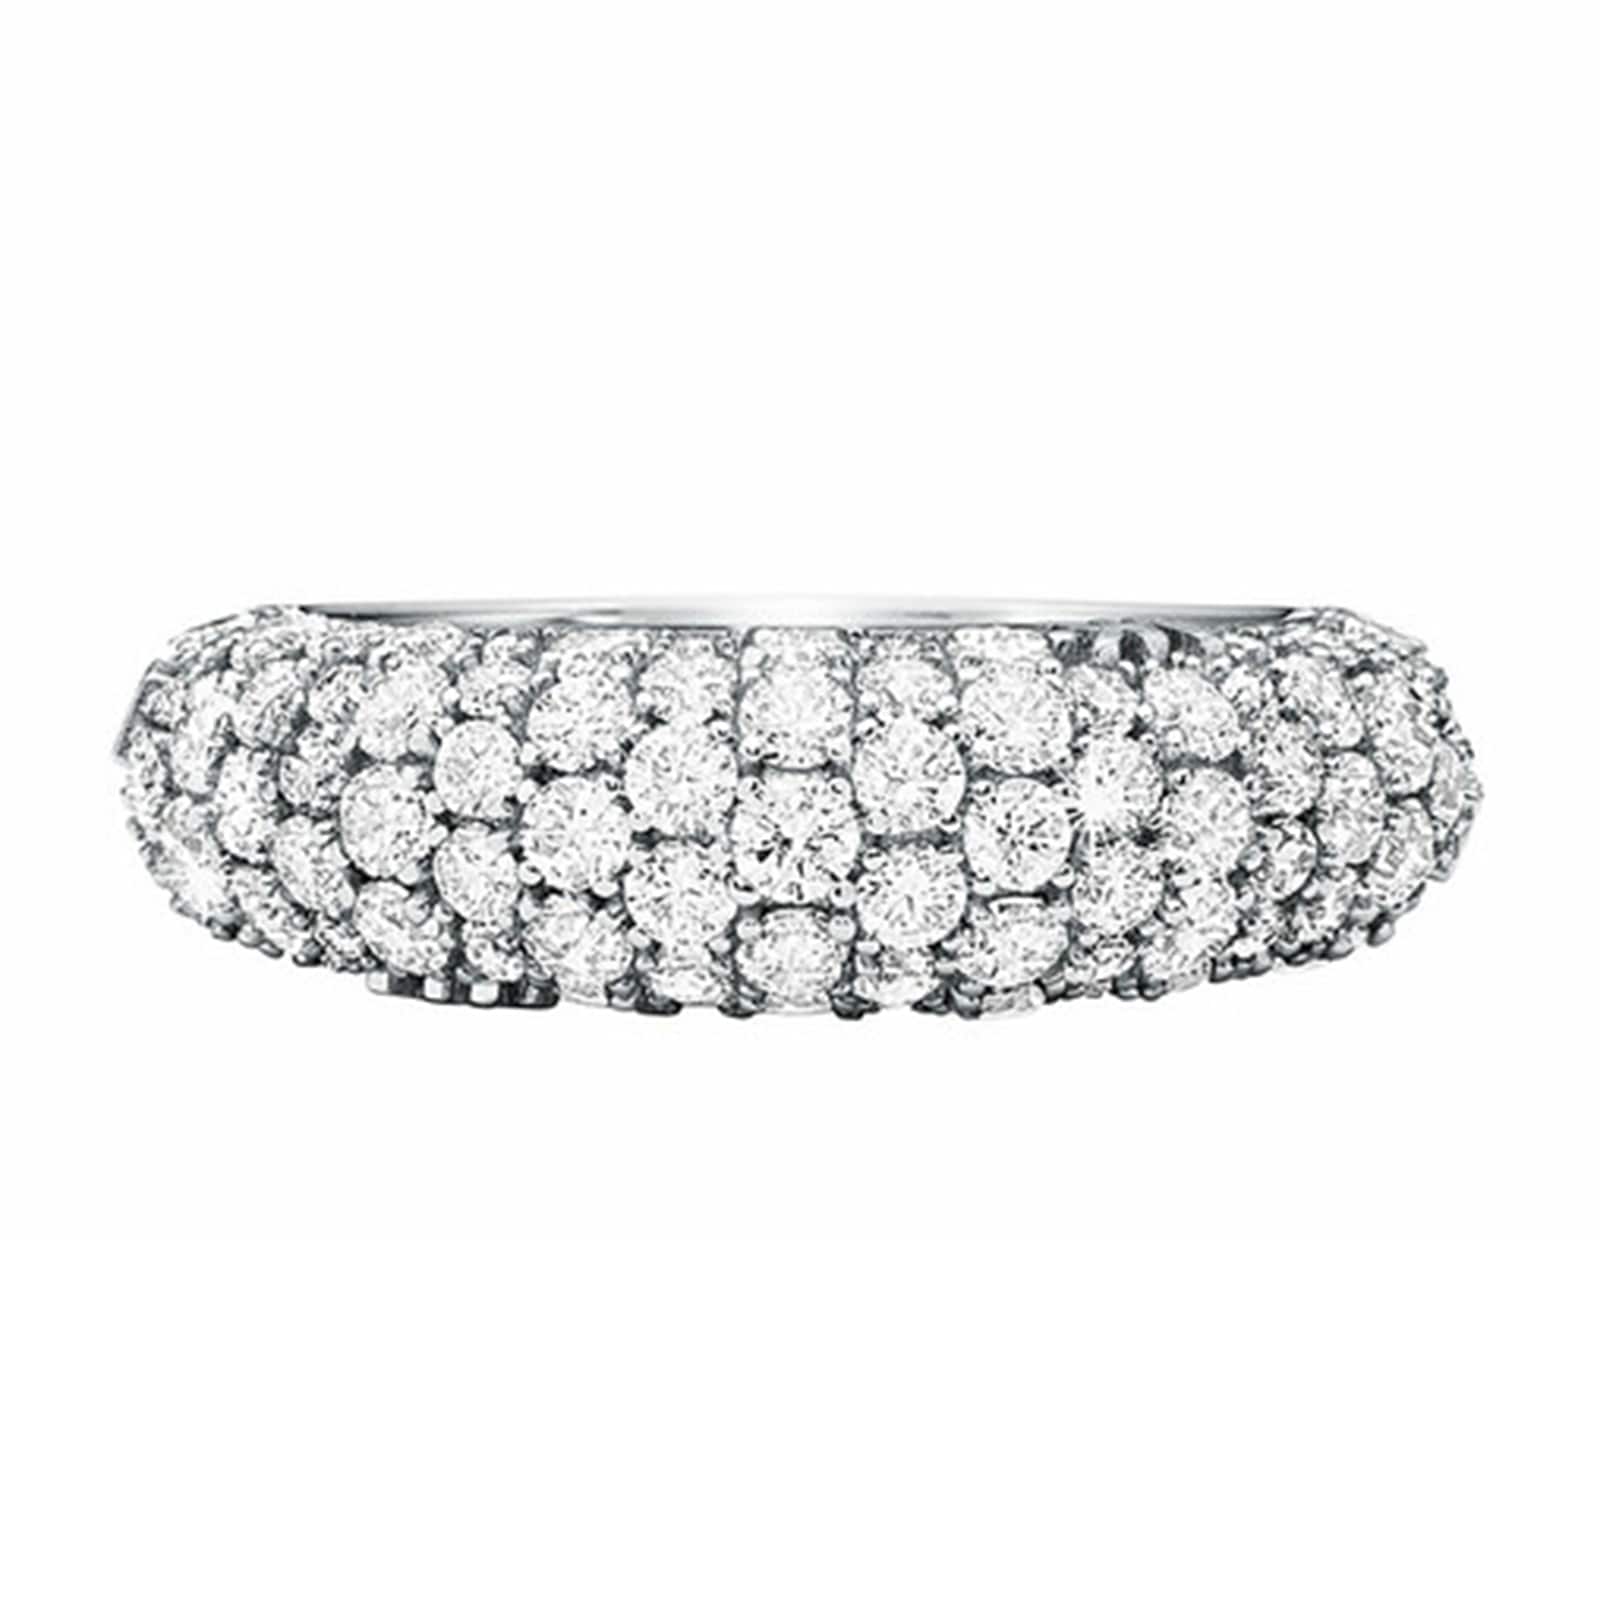 Michael Kors Jewellery, Michael Kors Earrings, Bracelets, Necklaces & Rings  for Sale UK | Goldsmiths